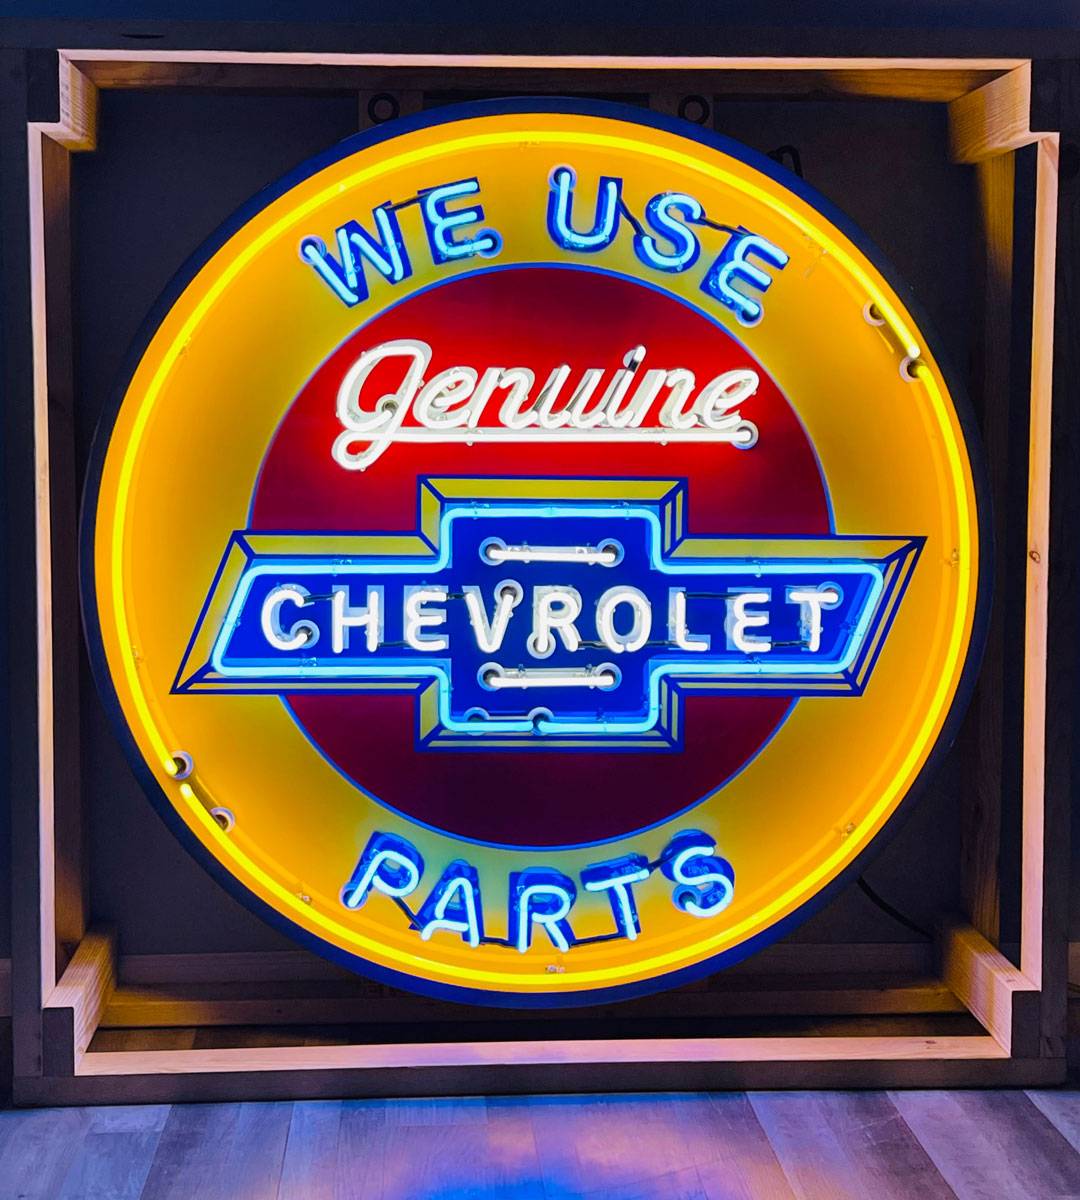 We Use Genuine Chevrolet Parts